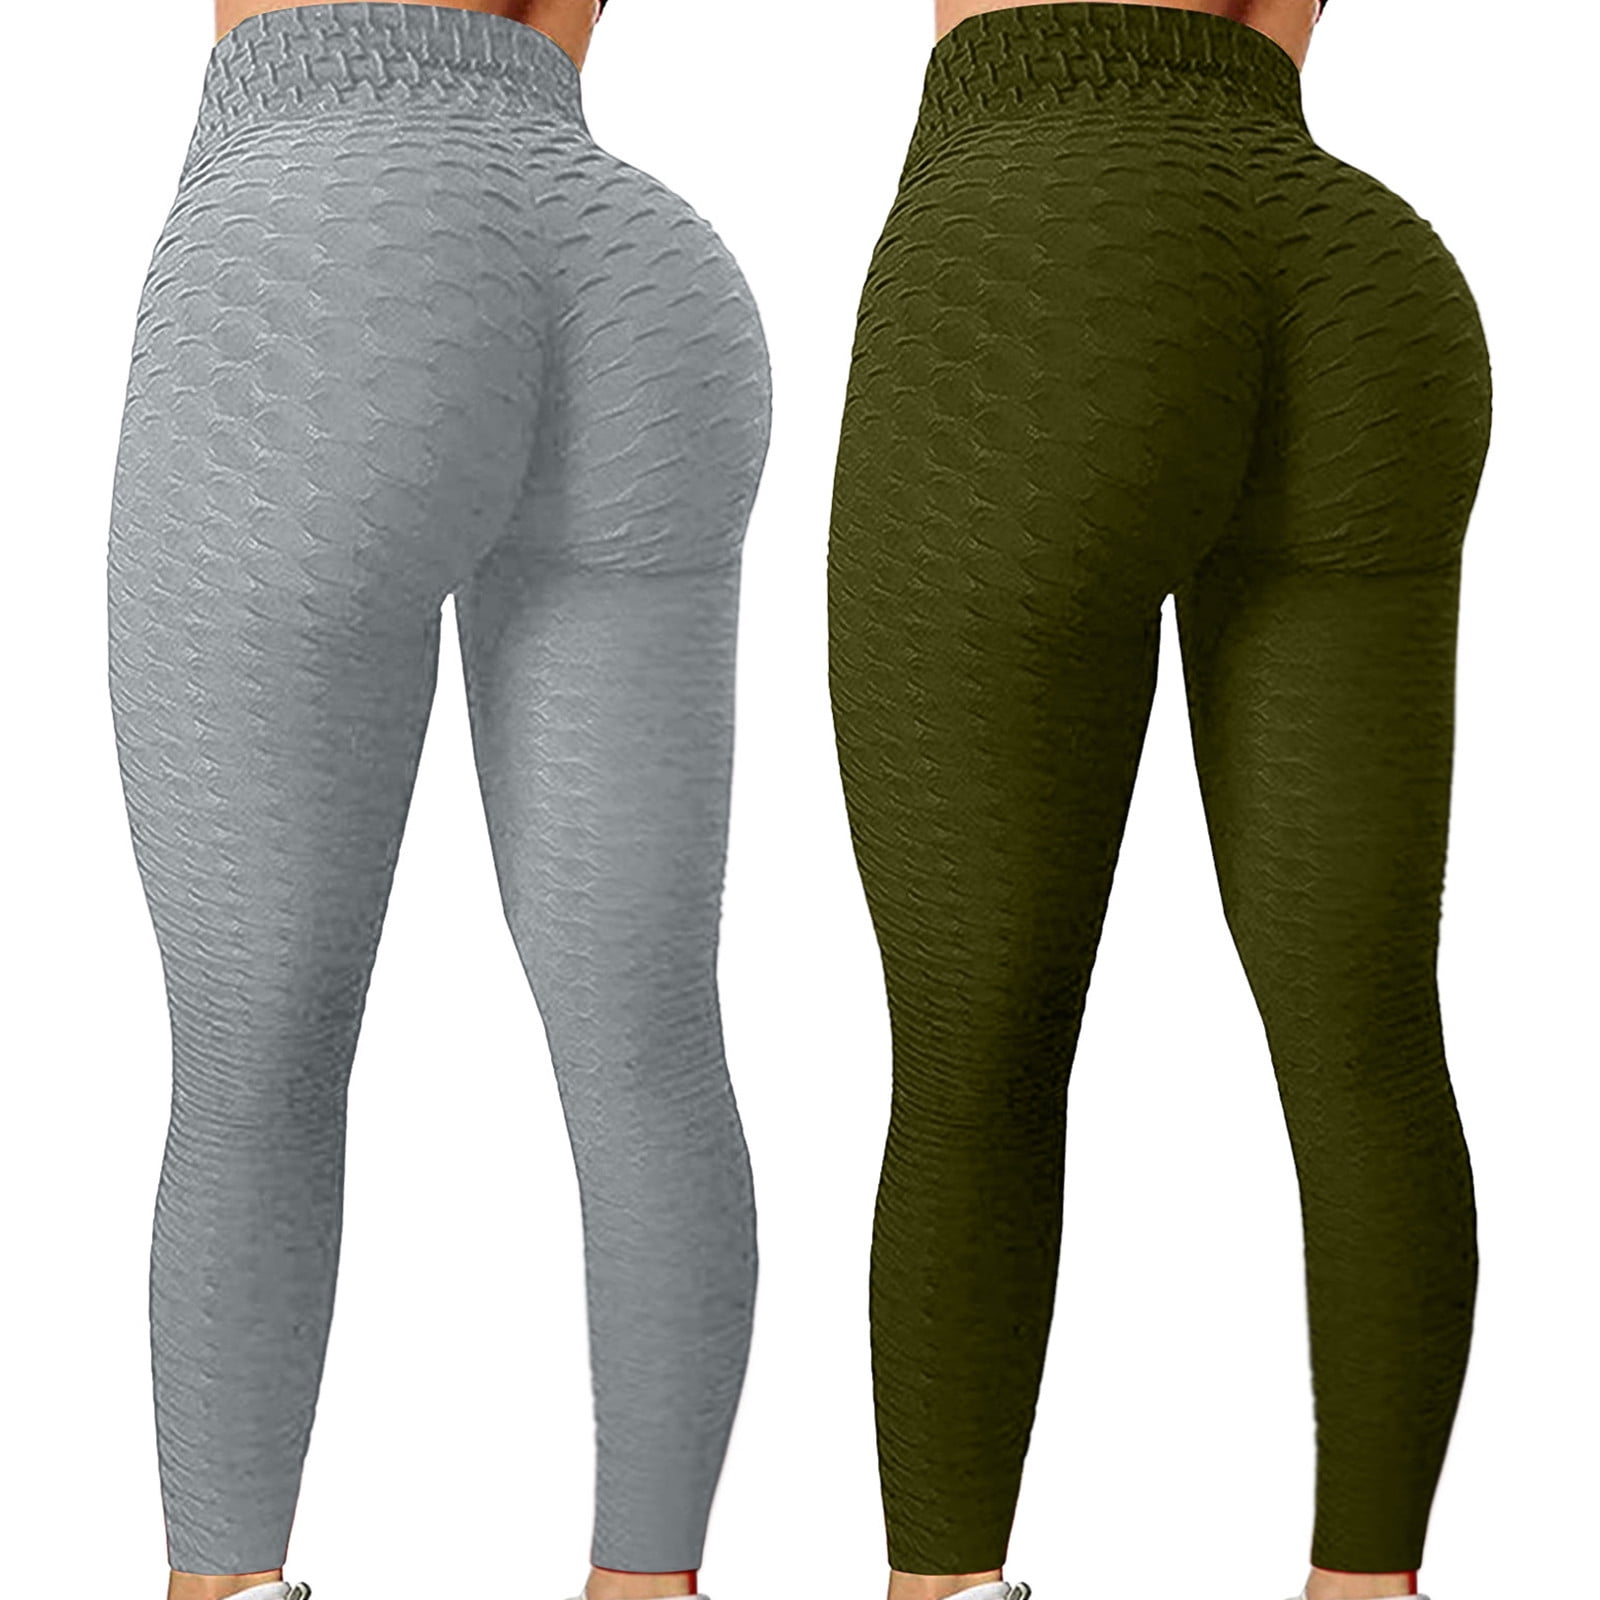 Gubotare Womens Yoga Pants Petite High Waisted Seamless Leggings for Women Tummy  Control, Squat Proof Workout Yoga Pants,Pink S 